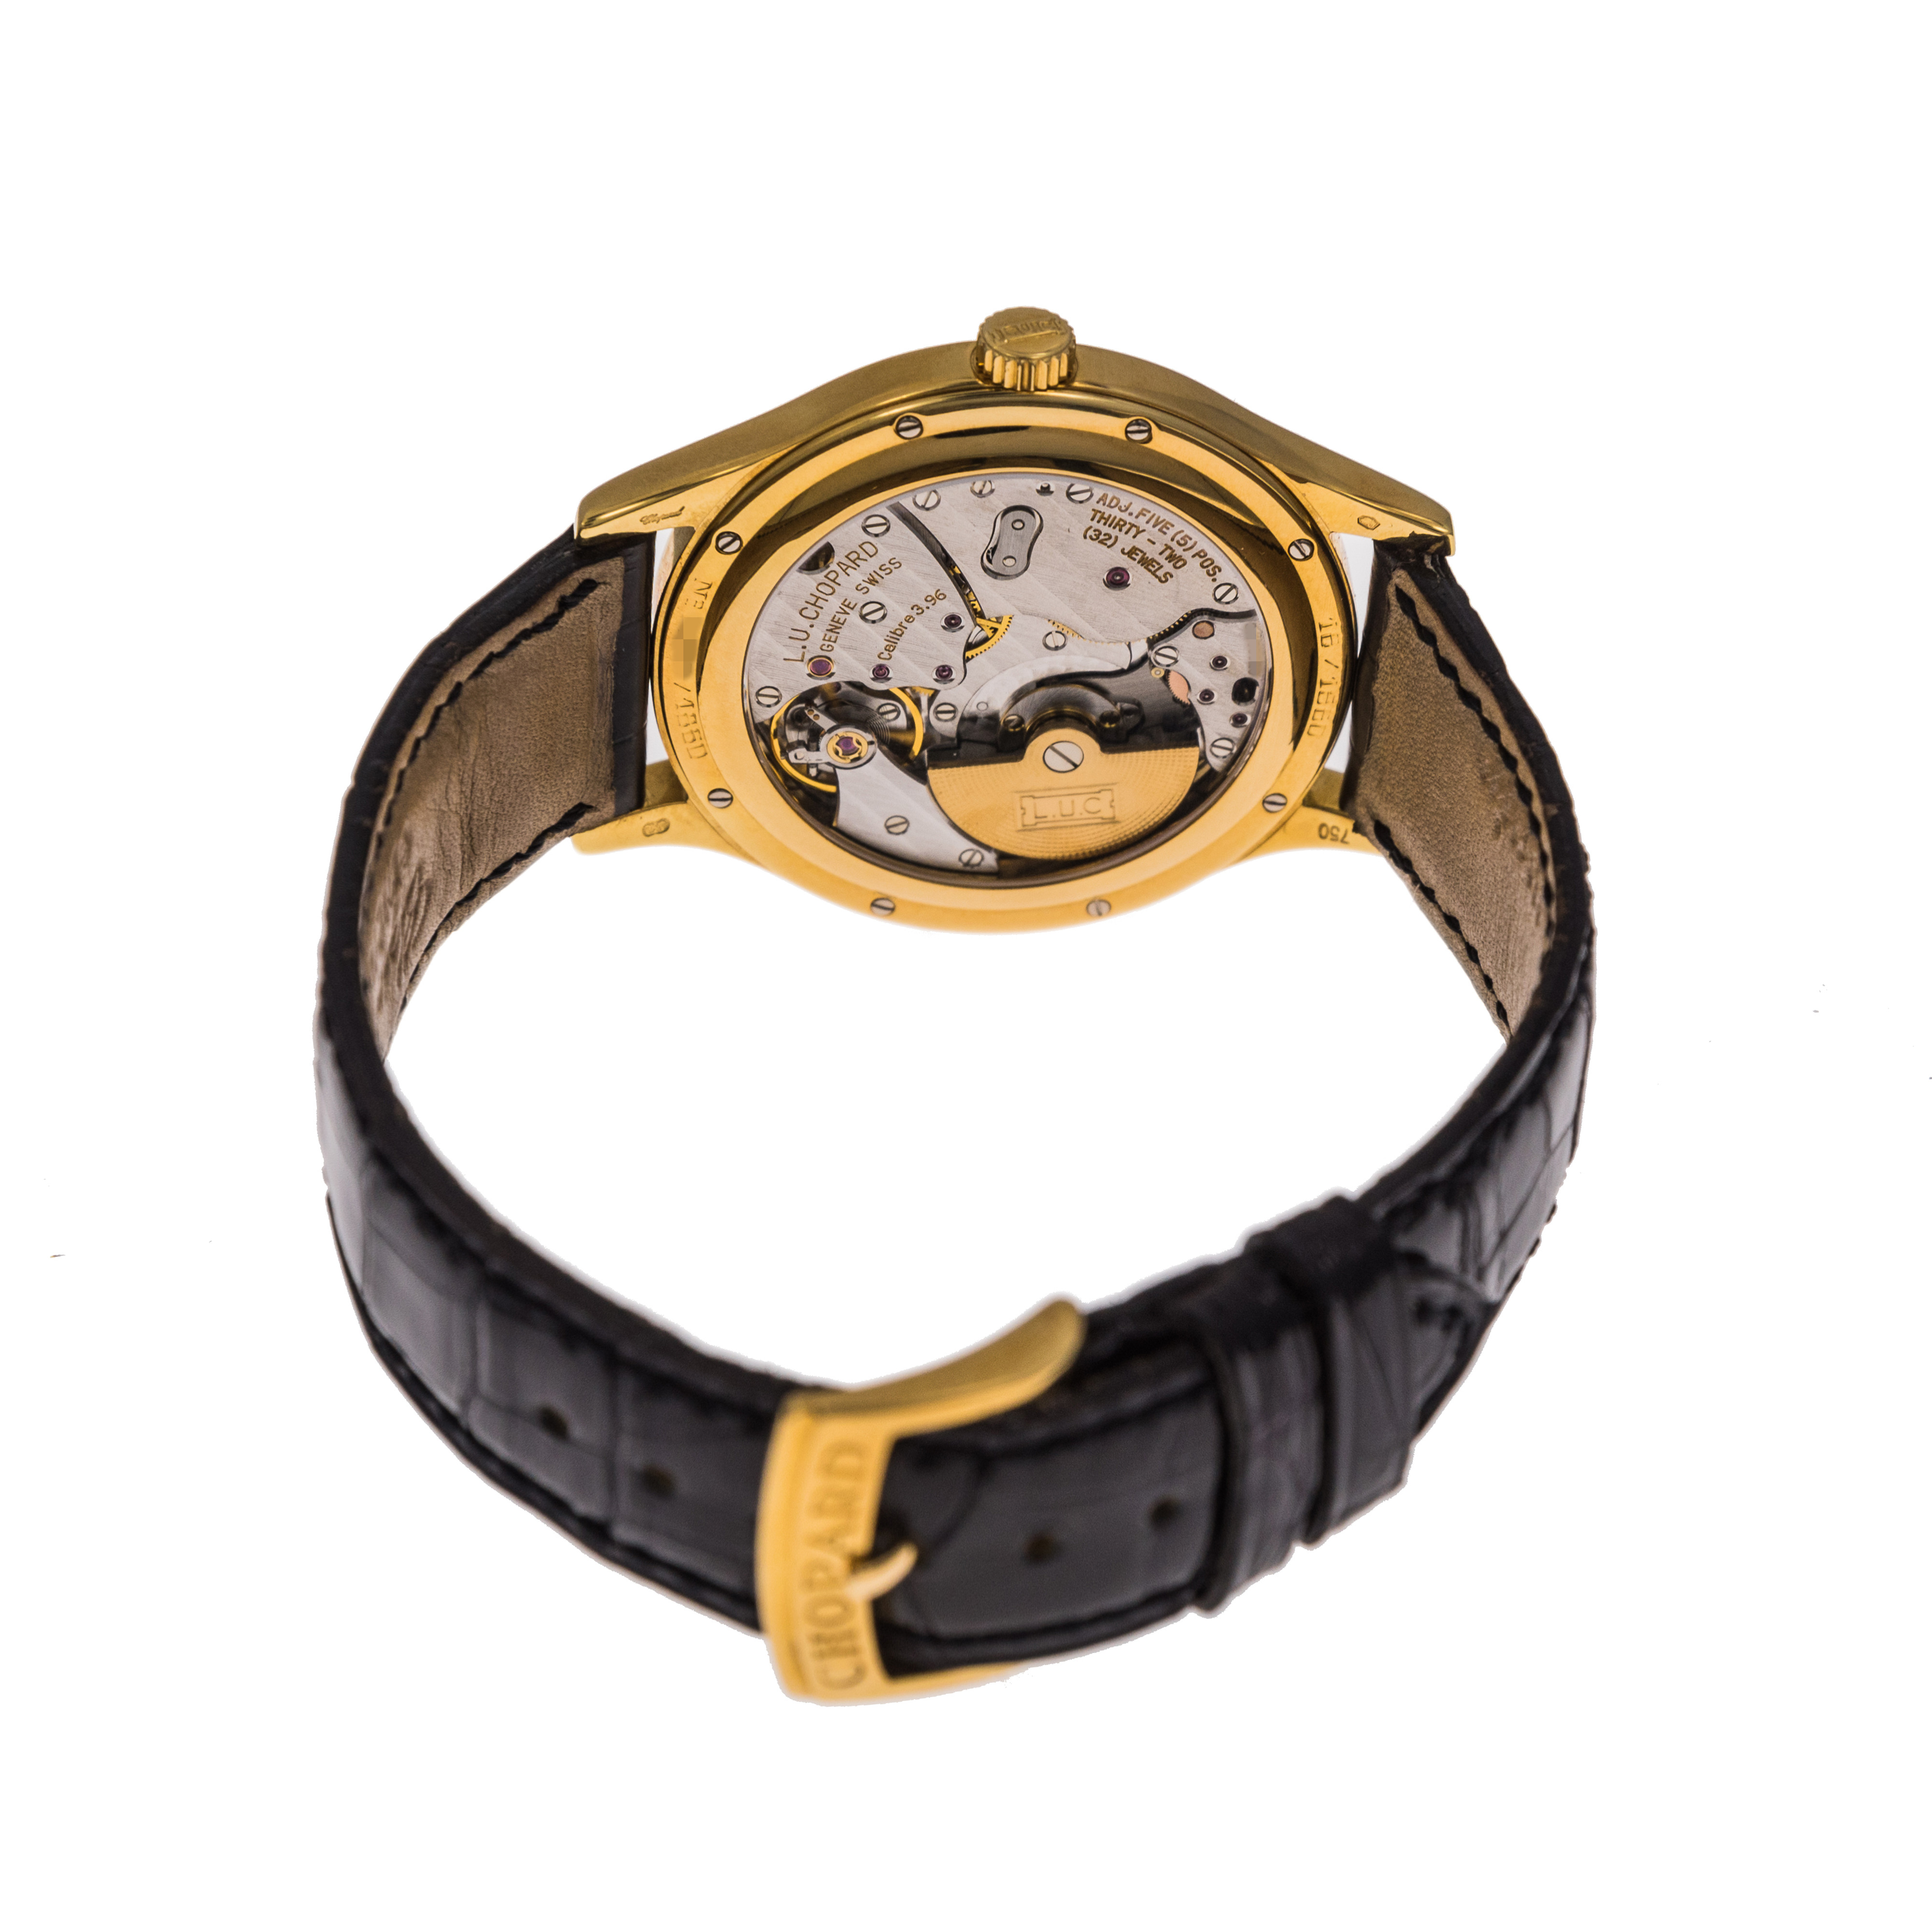 SOLD c2003 Chopard L.U.C. Pro One with box - Birth Year Watches